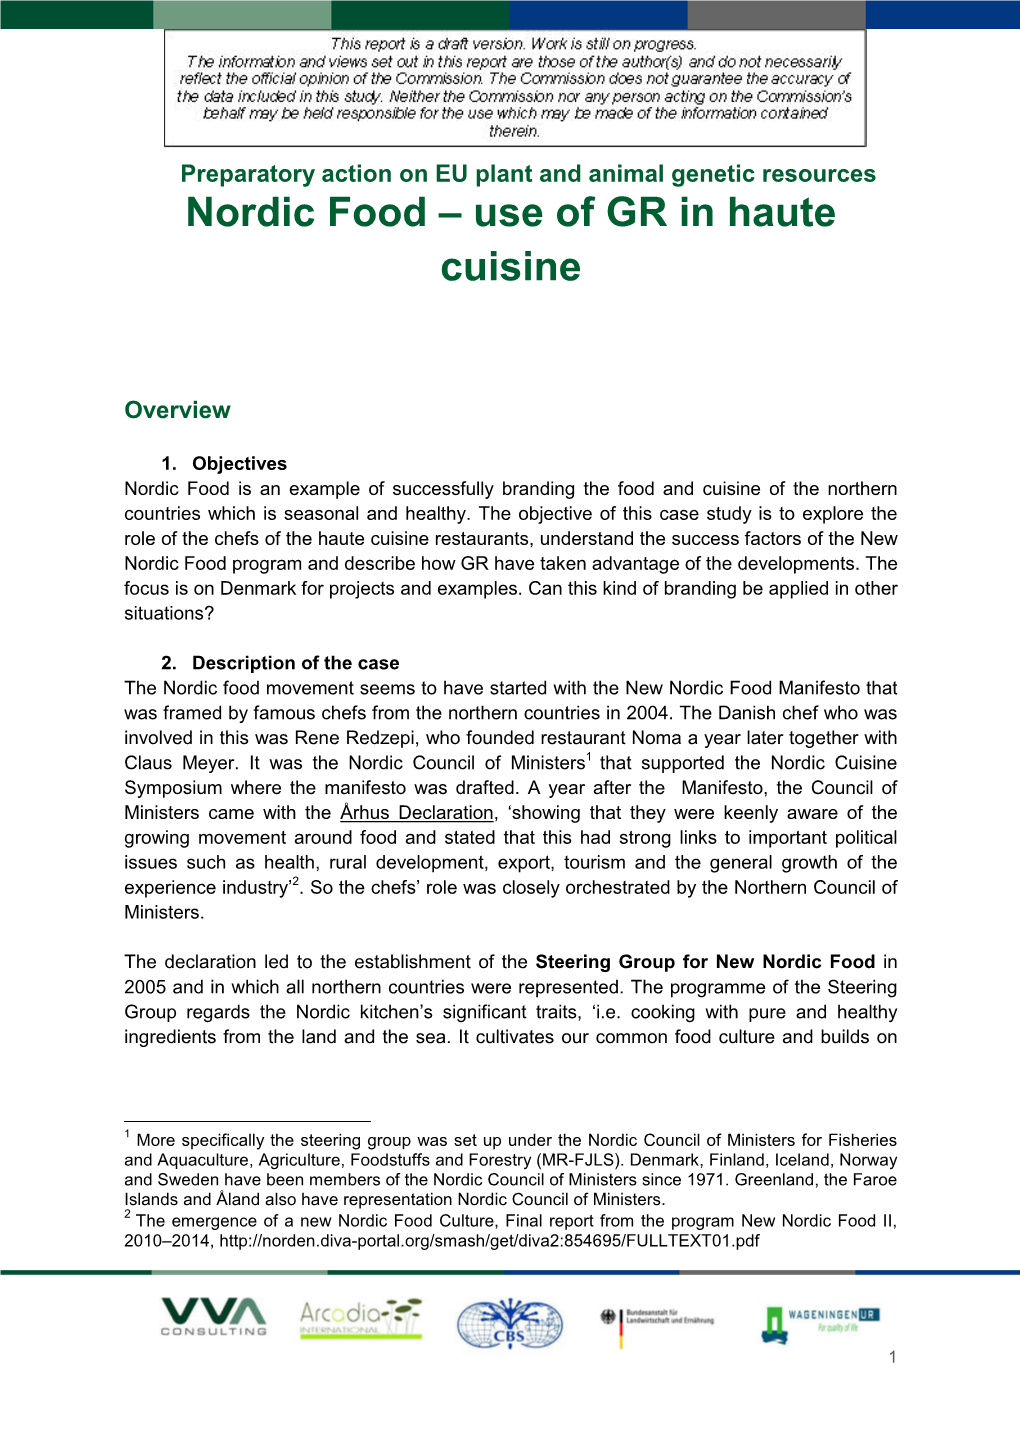 Nordic Food – Use of GR in Haute Cuisine